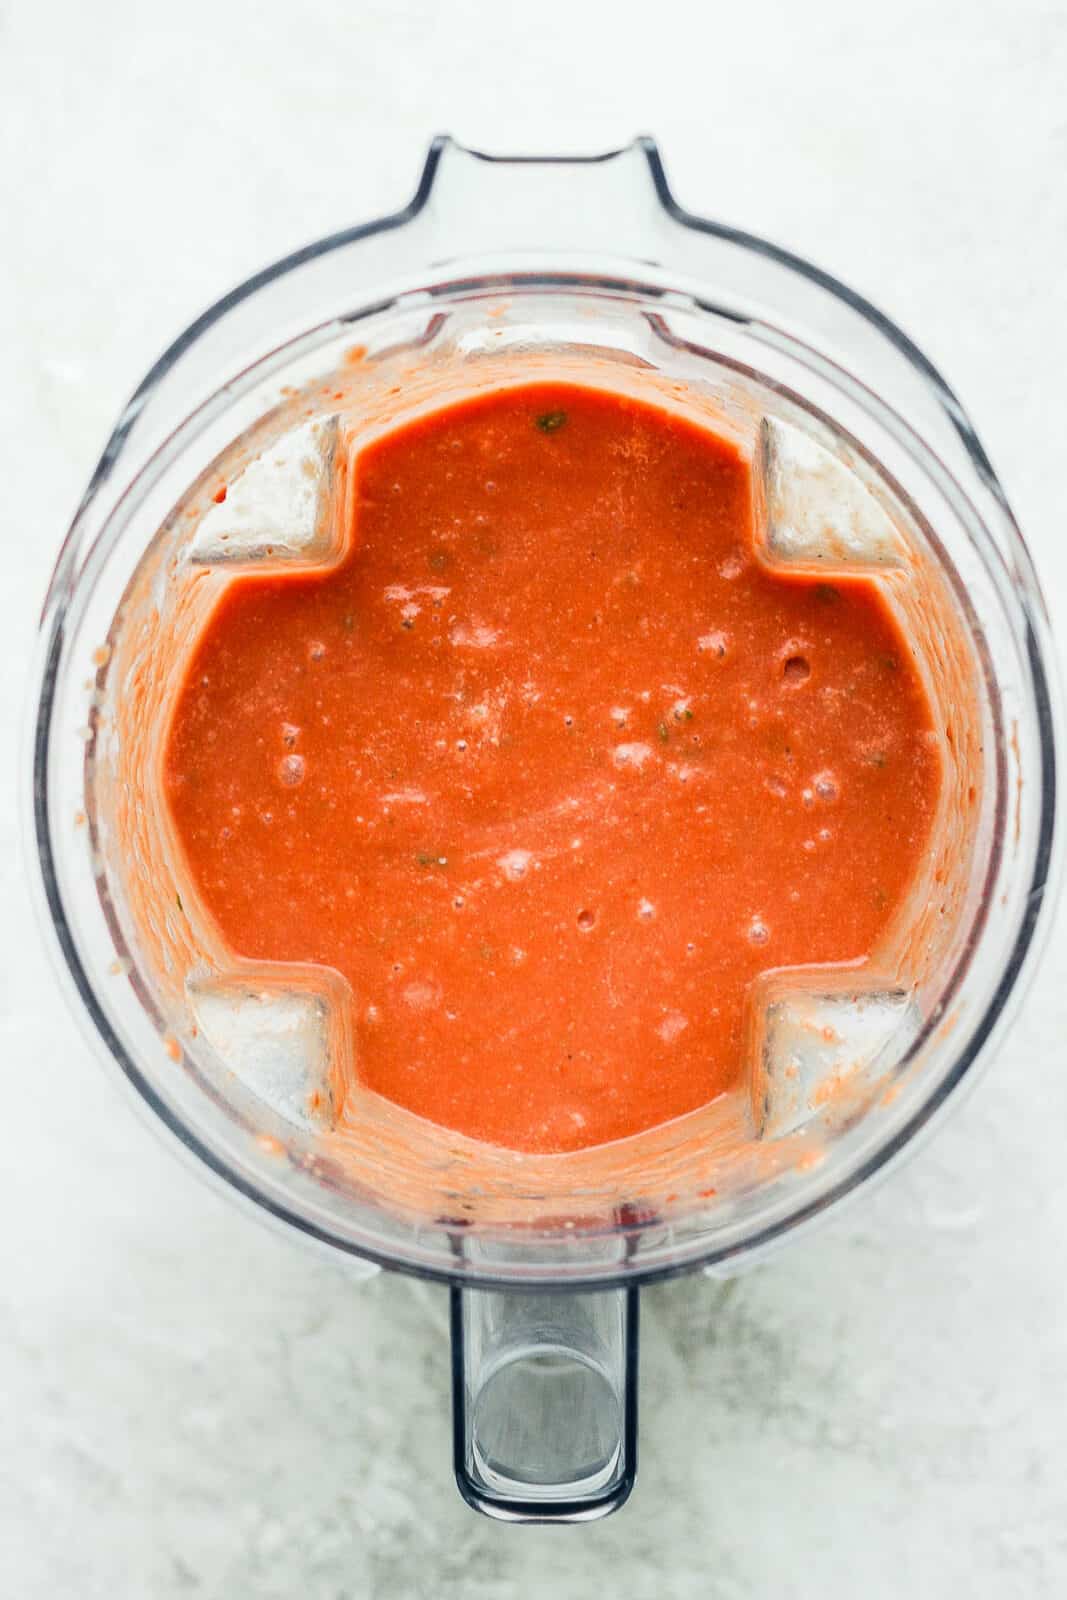 Blended creamy tomato basil soup in the blender.